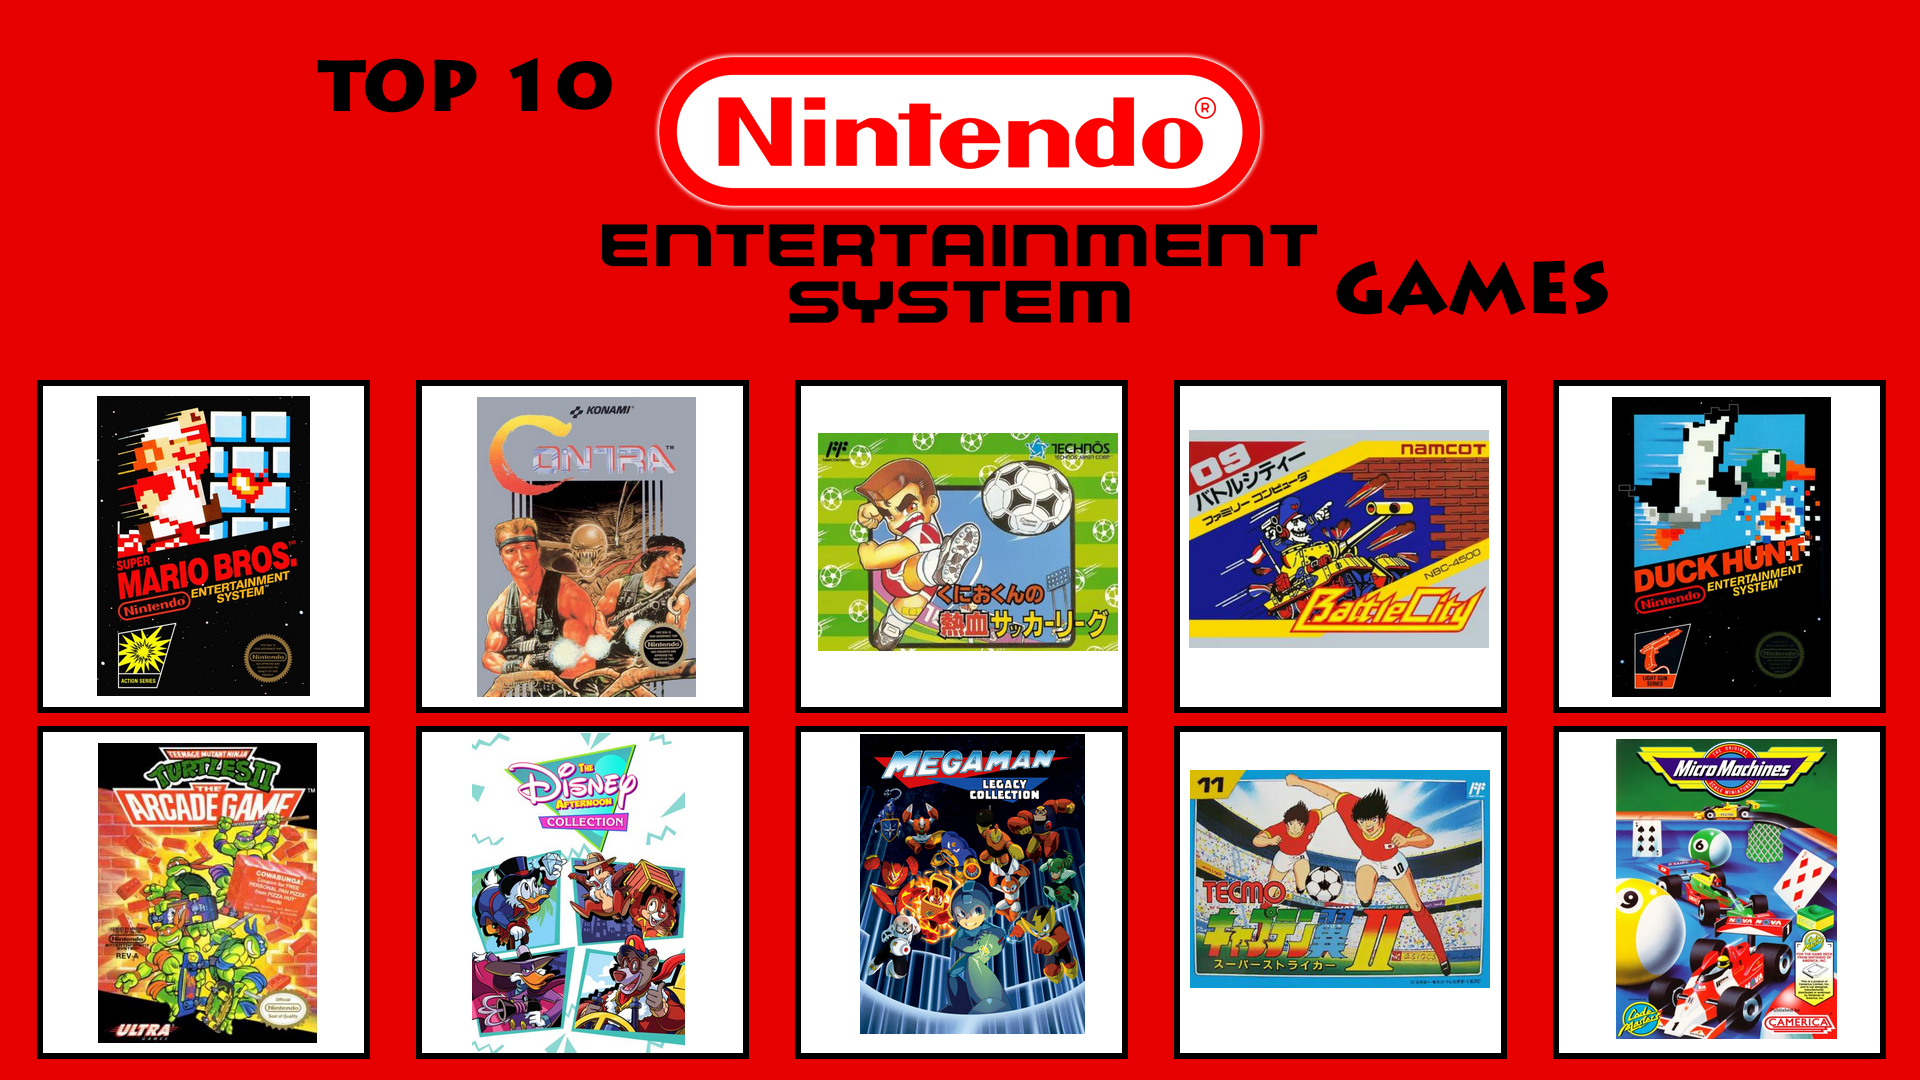 KoopaTV: Special Save File Versions of NES Games in Nintendo